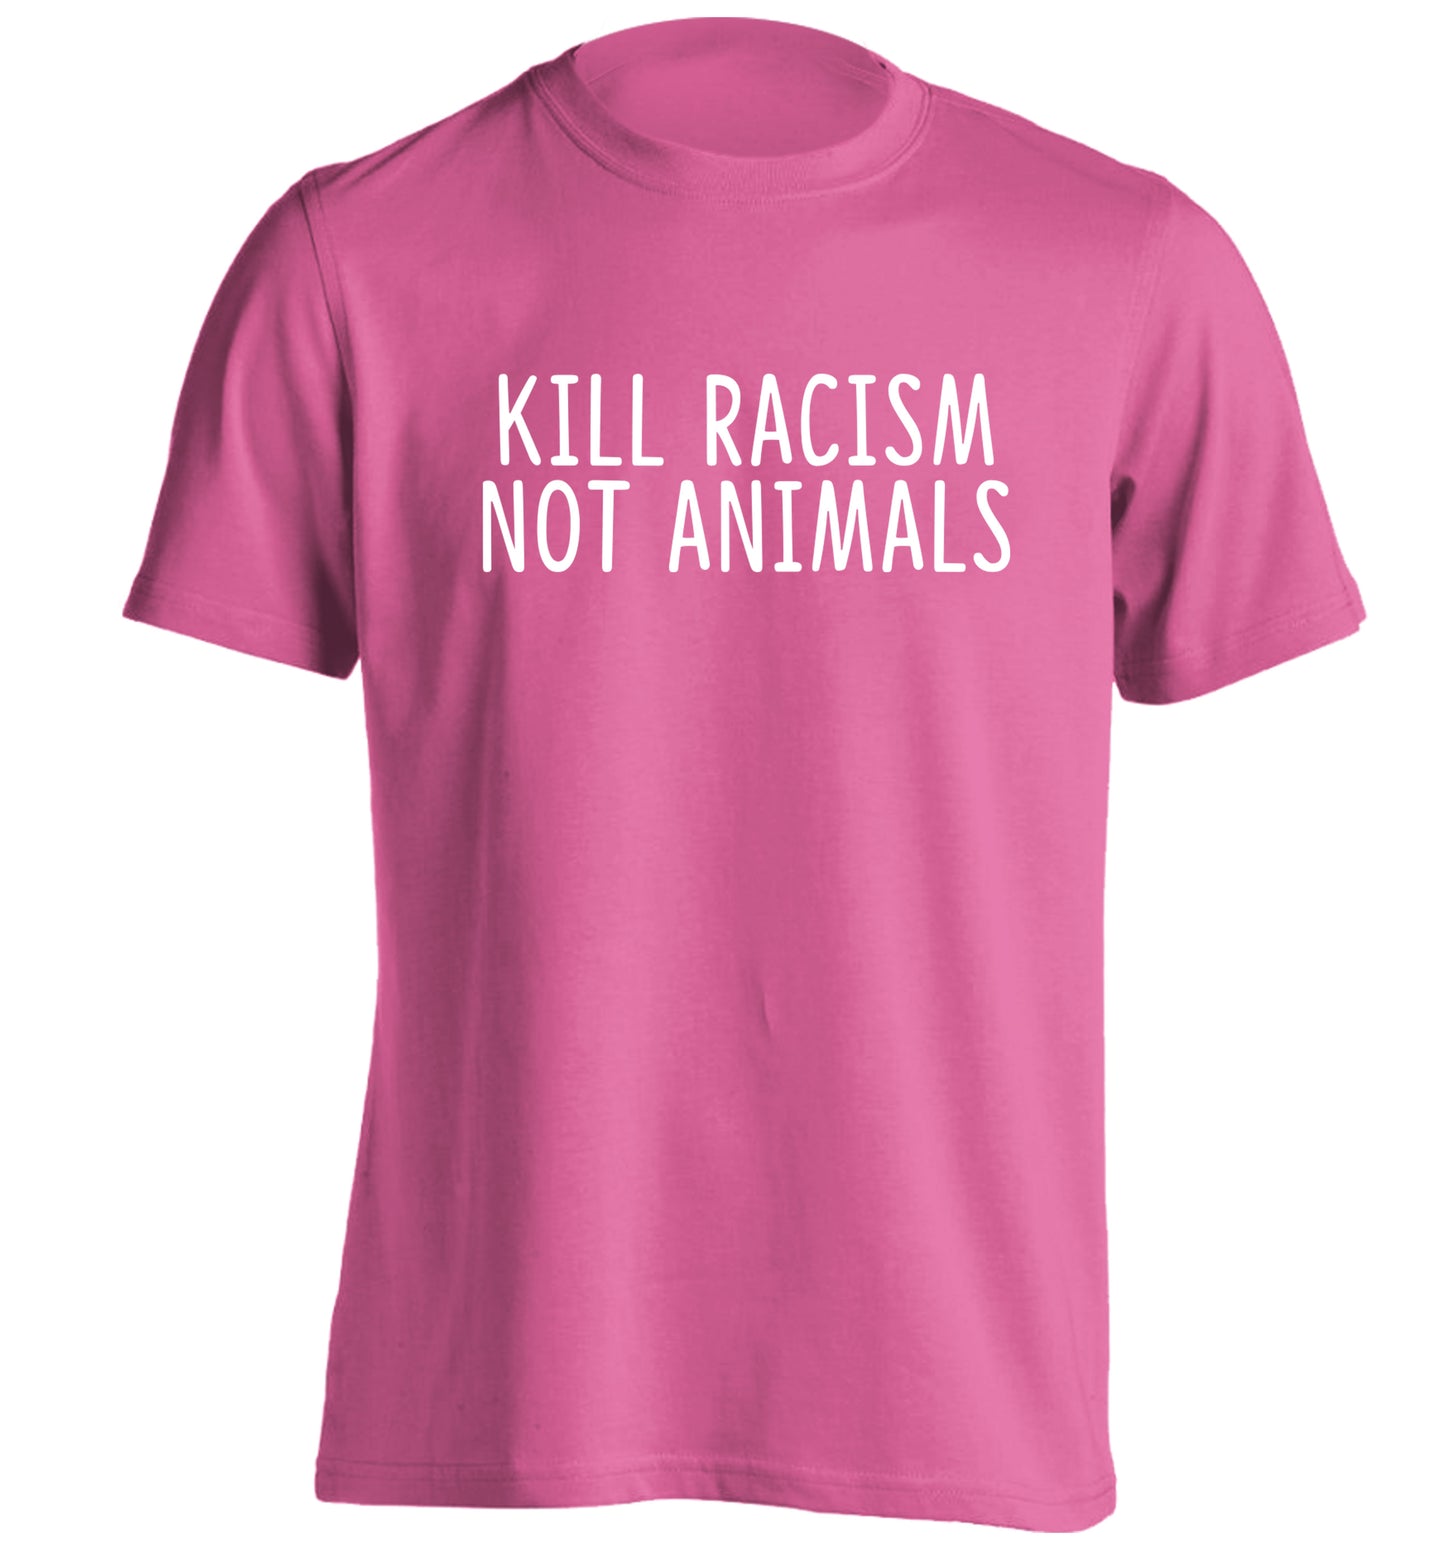 Kill Racism Not Animals adults unisex pink Tshirt 2XL